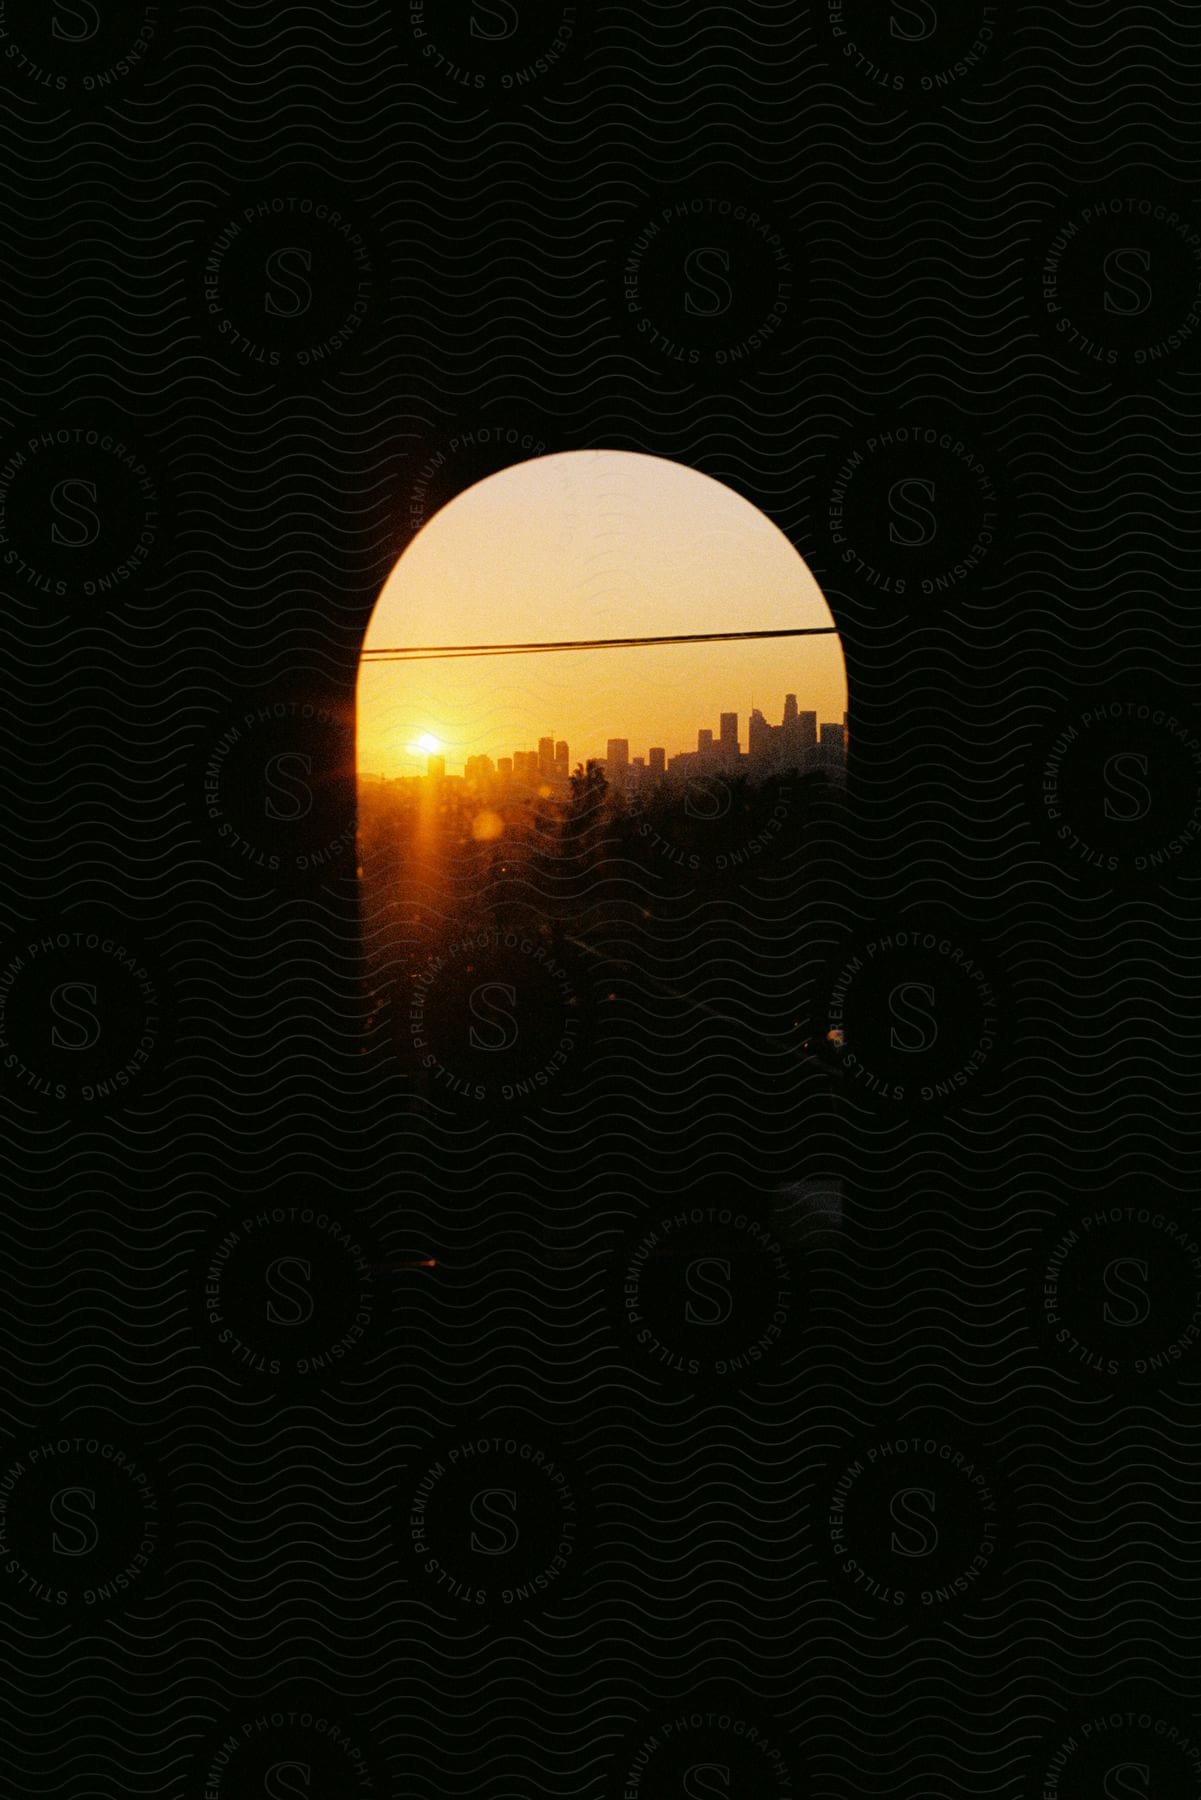 A sunset skyline of a big city seen through a window in a dark room